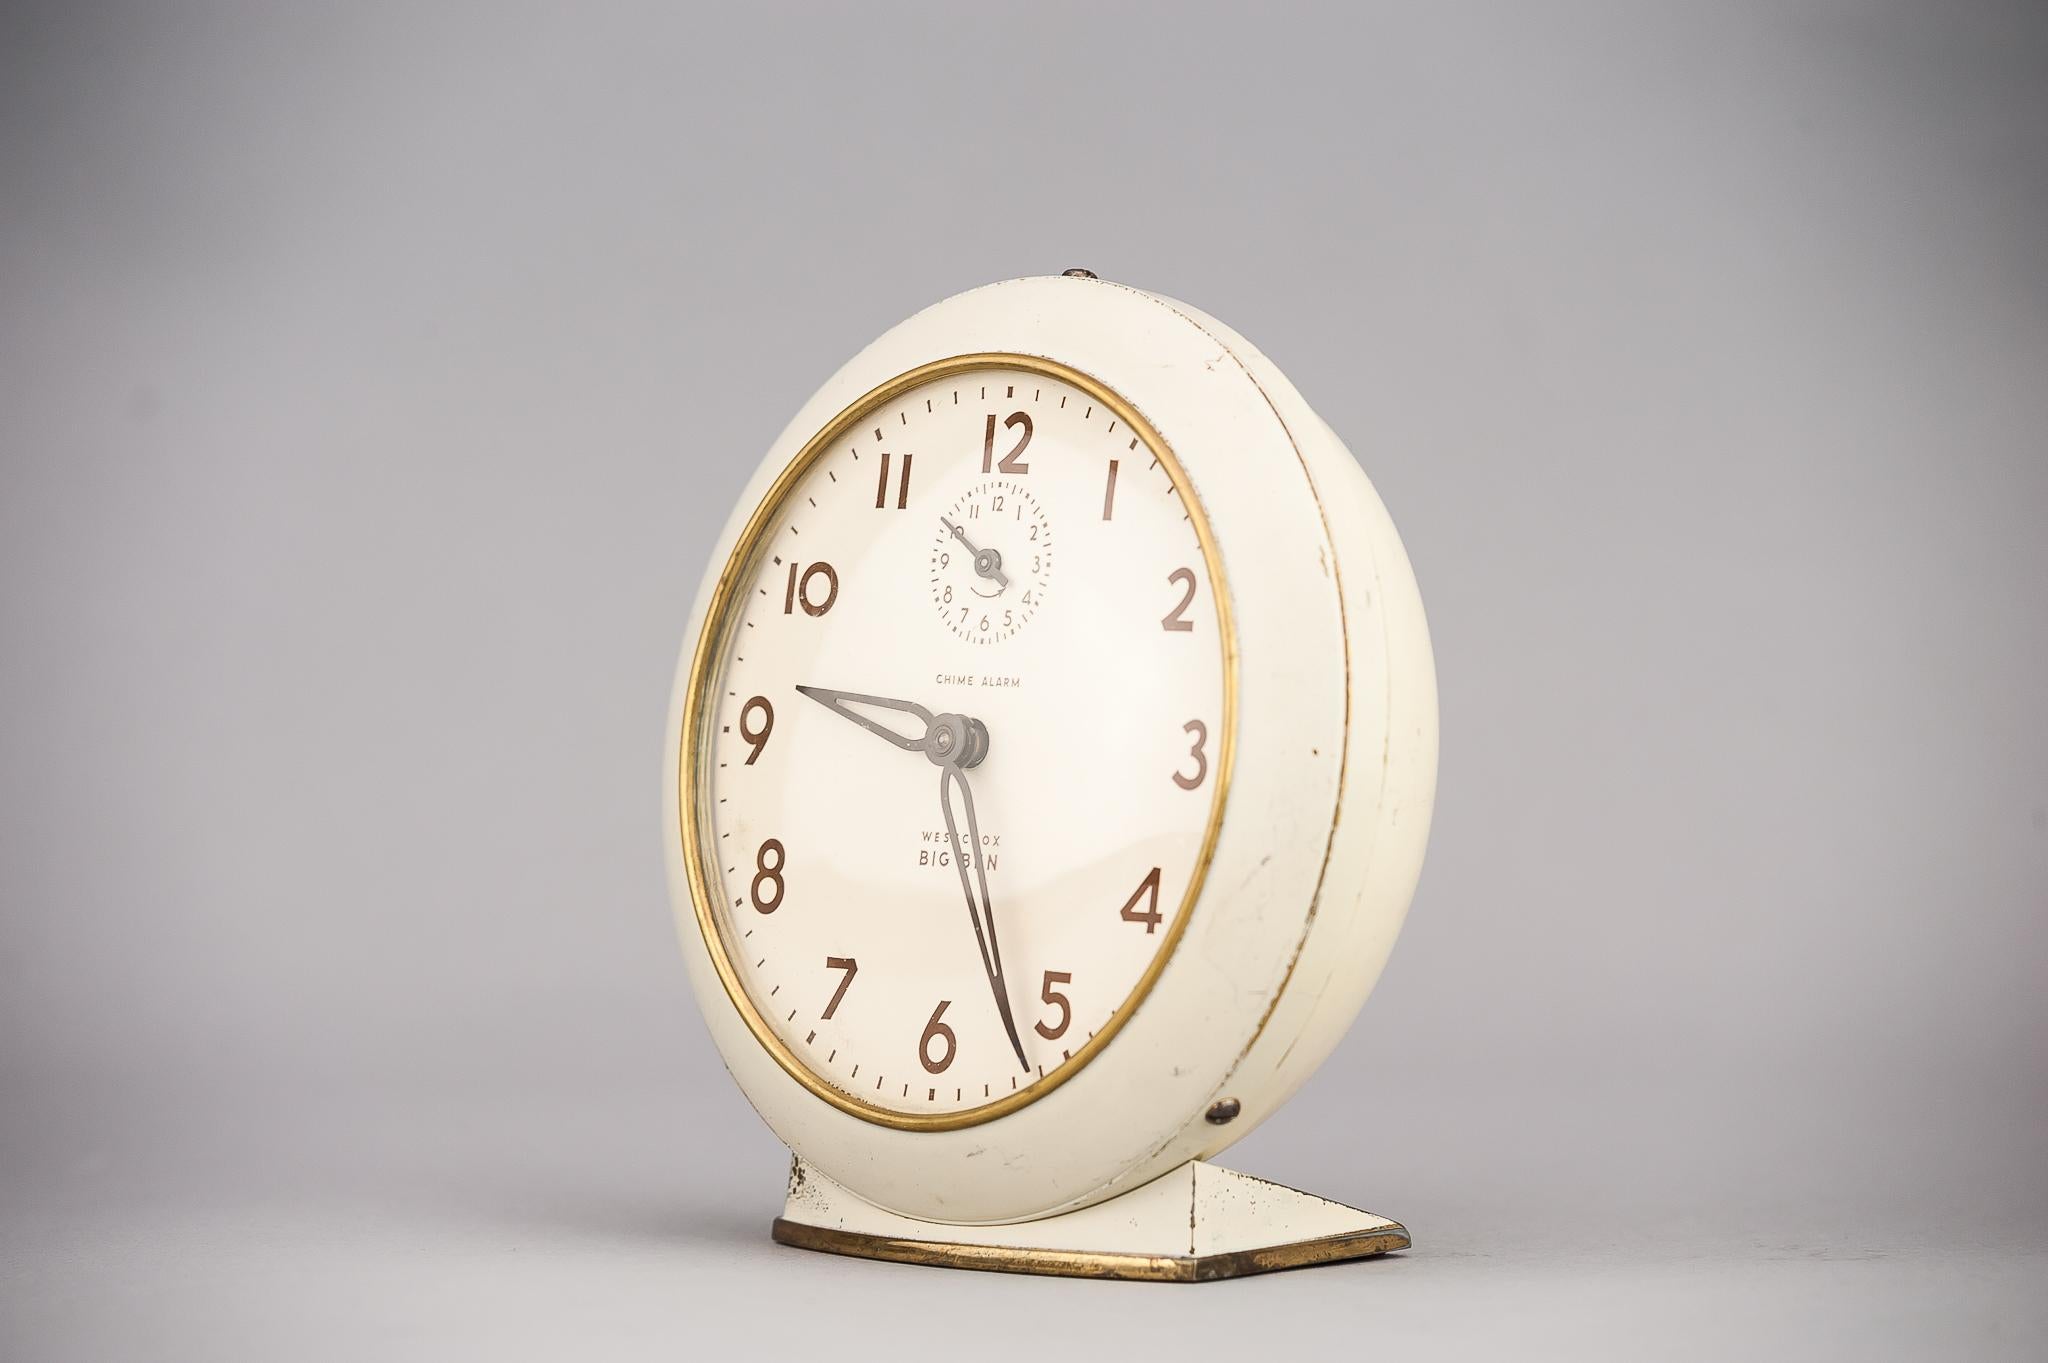 Westclox Big Ben alarm clock circa 1950s. Made in the U.S.A
Full functionality.
Very nice alarm clock sound.